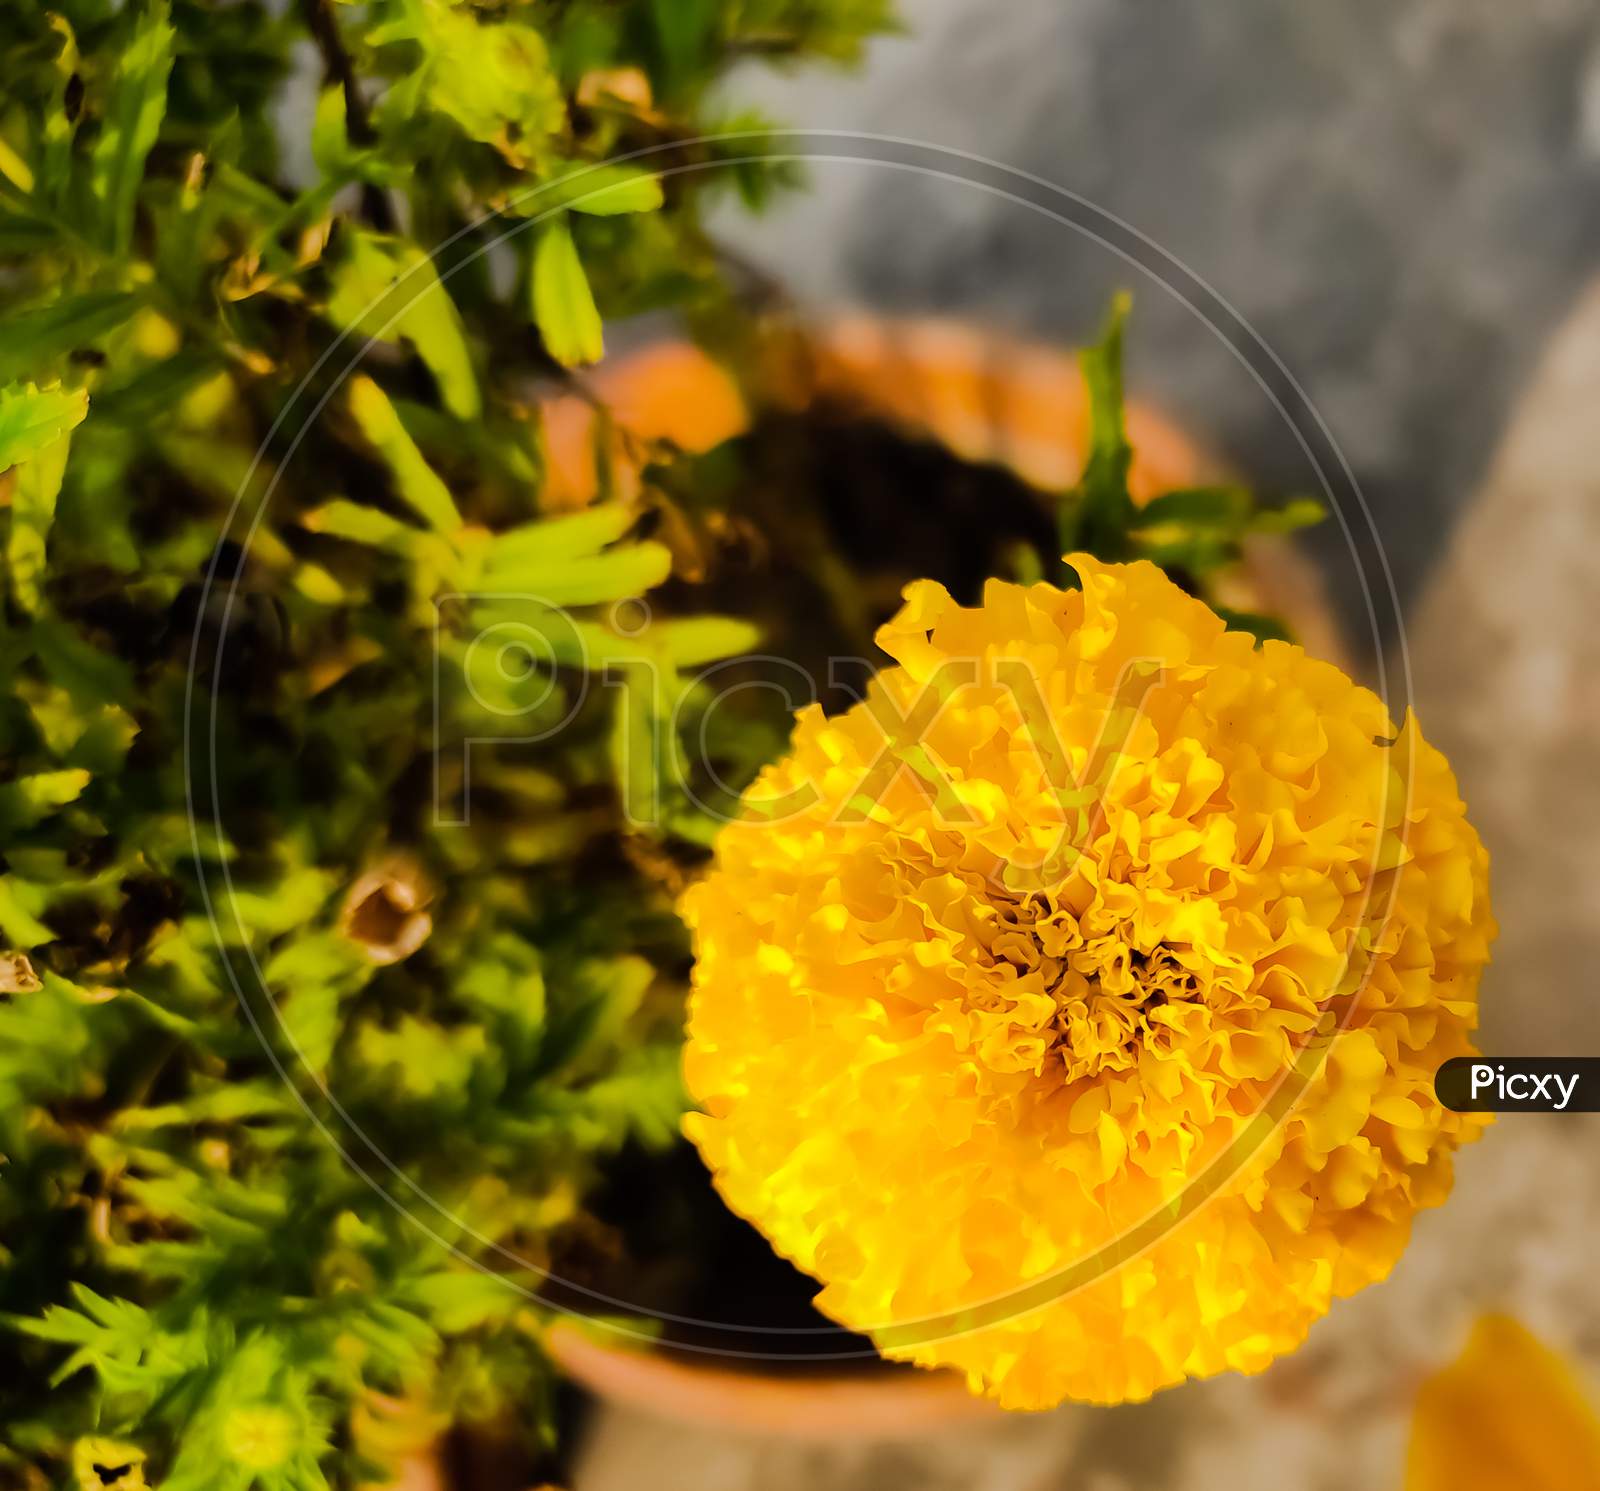 marigold flower blossom in winter